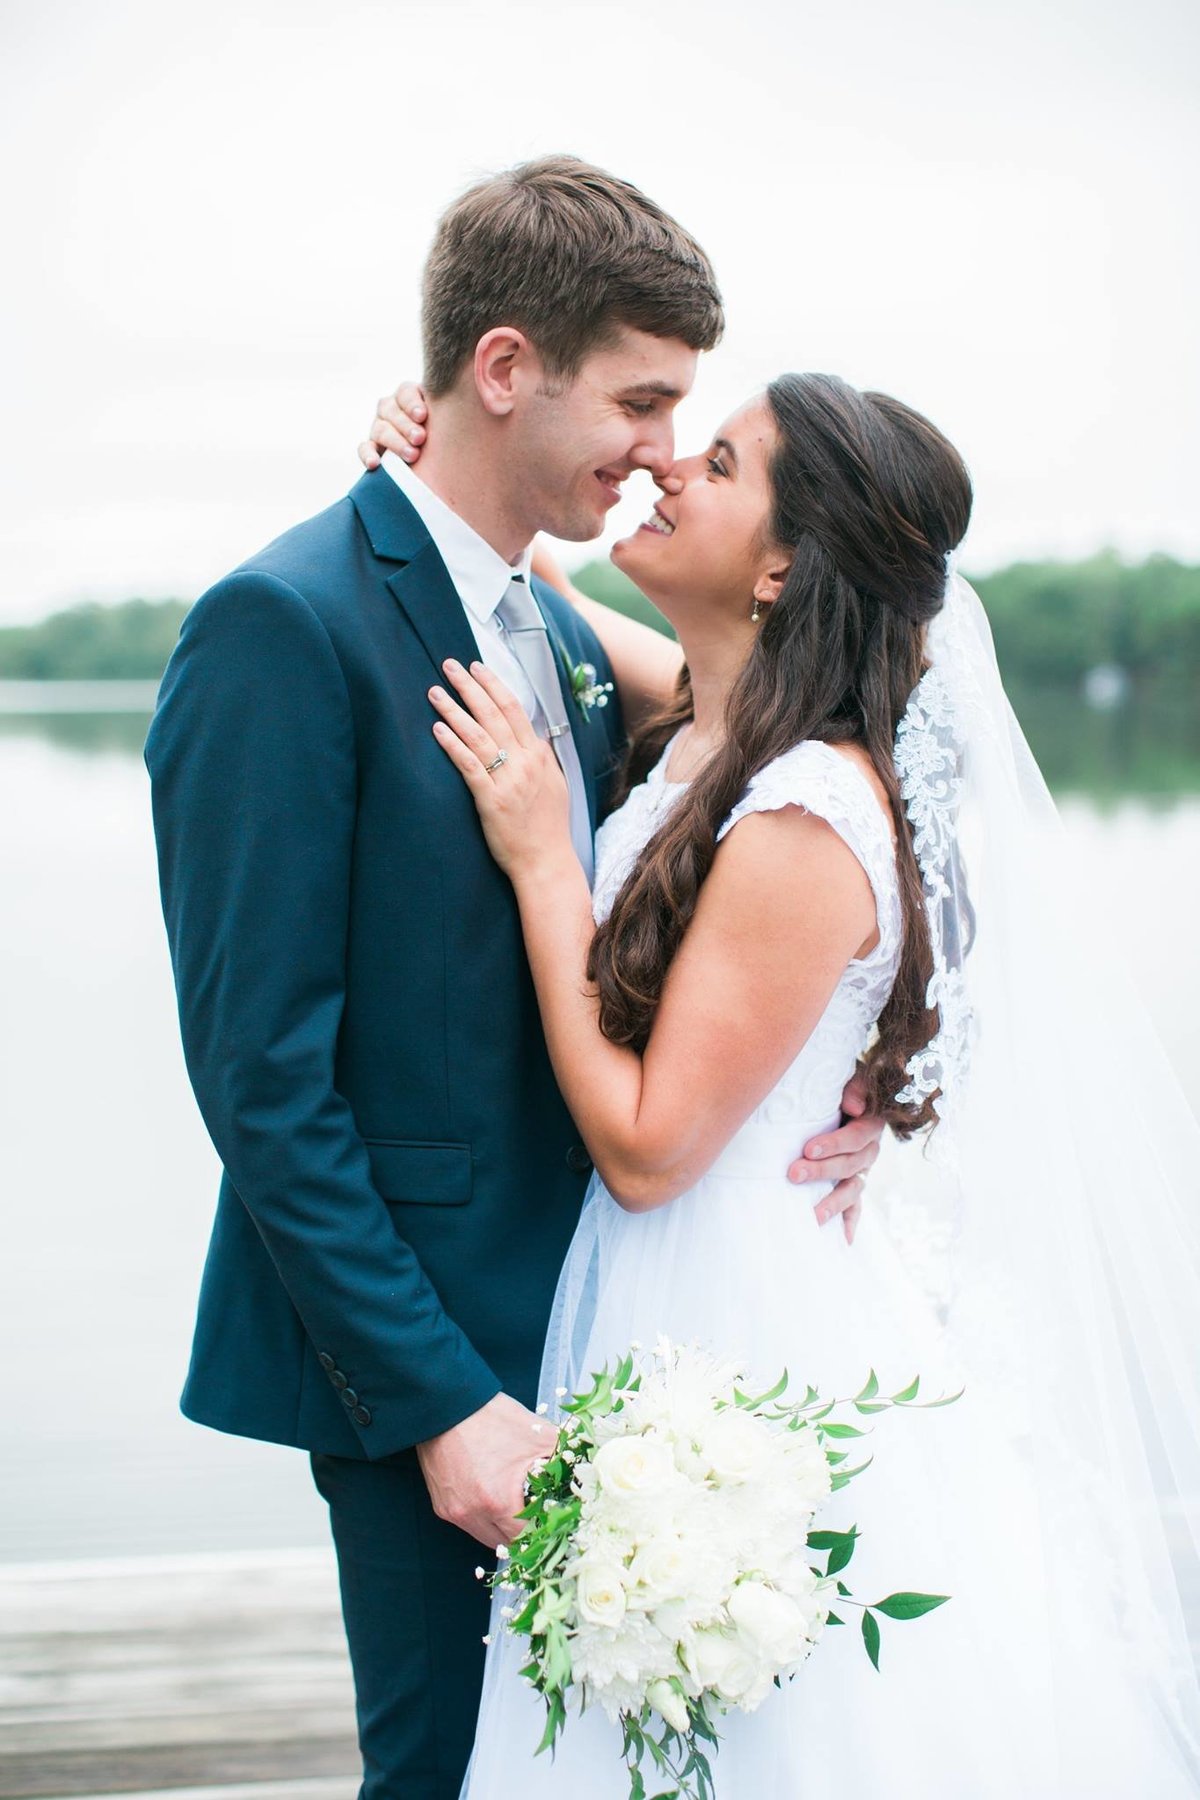 Wedding Photographer, bride with her arm around groom's neck